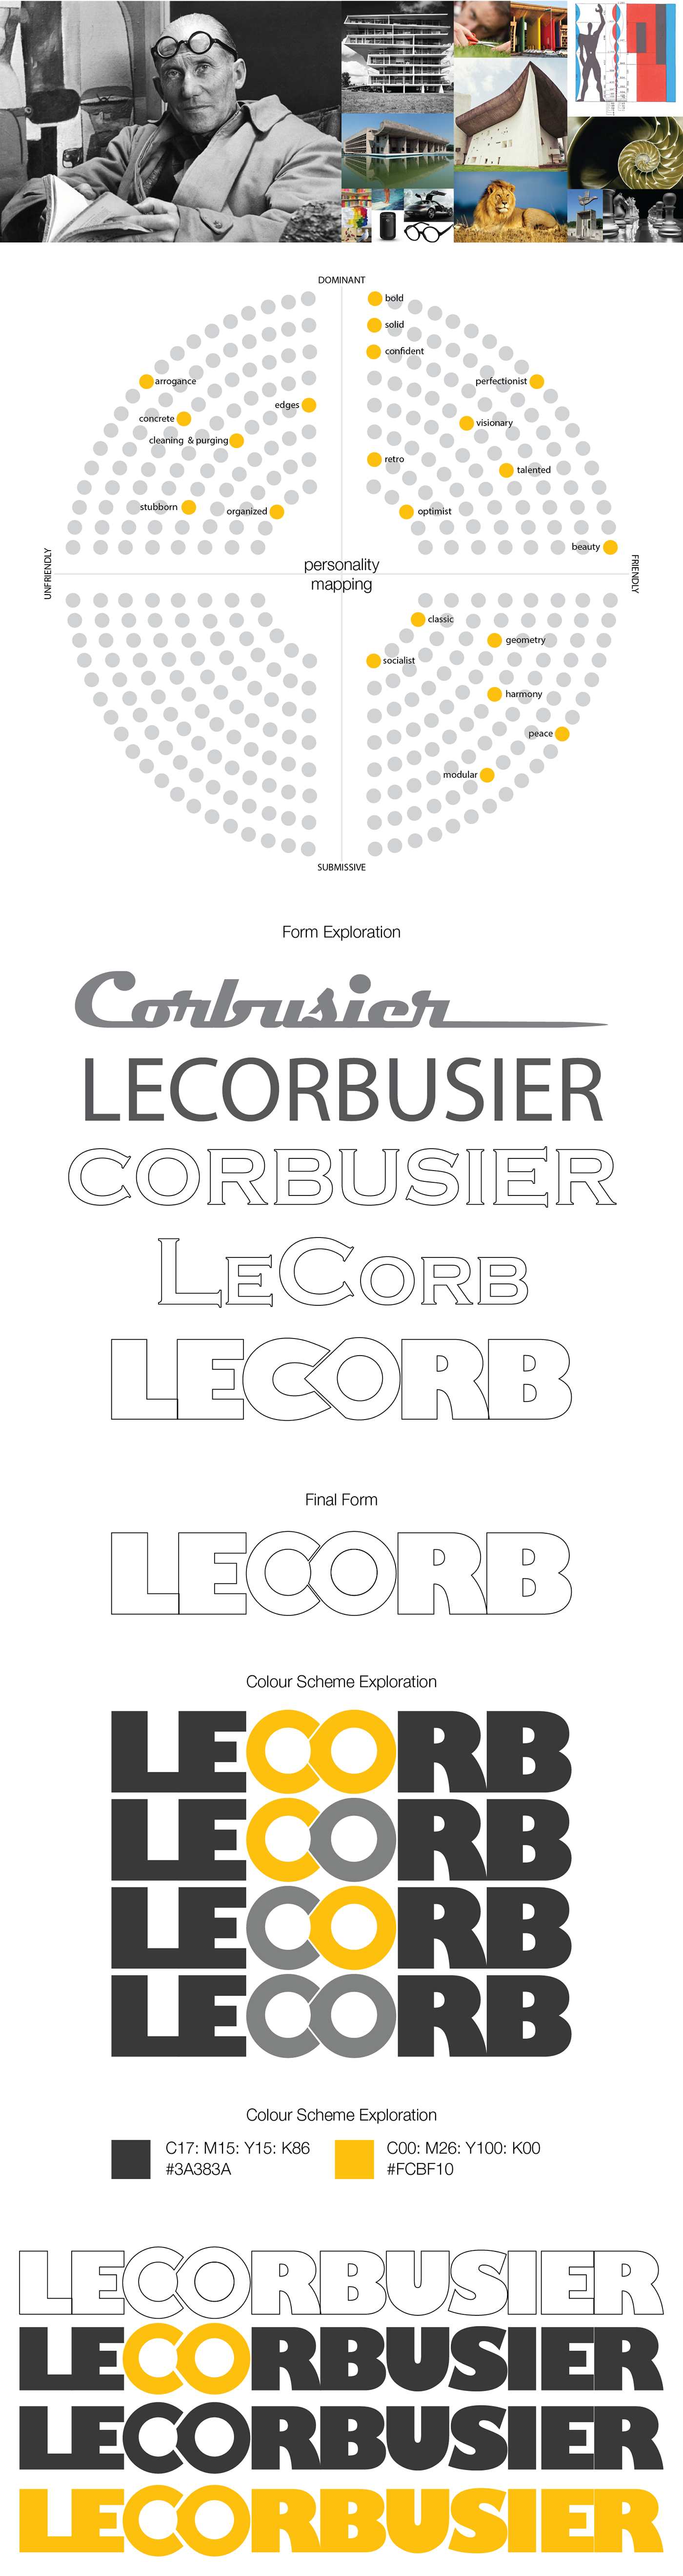 LeCorbusier Celebrity identity Personality Mapping mood board Colour scheme